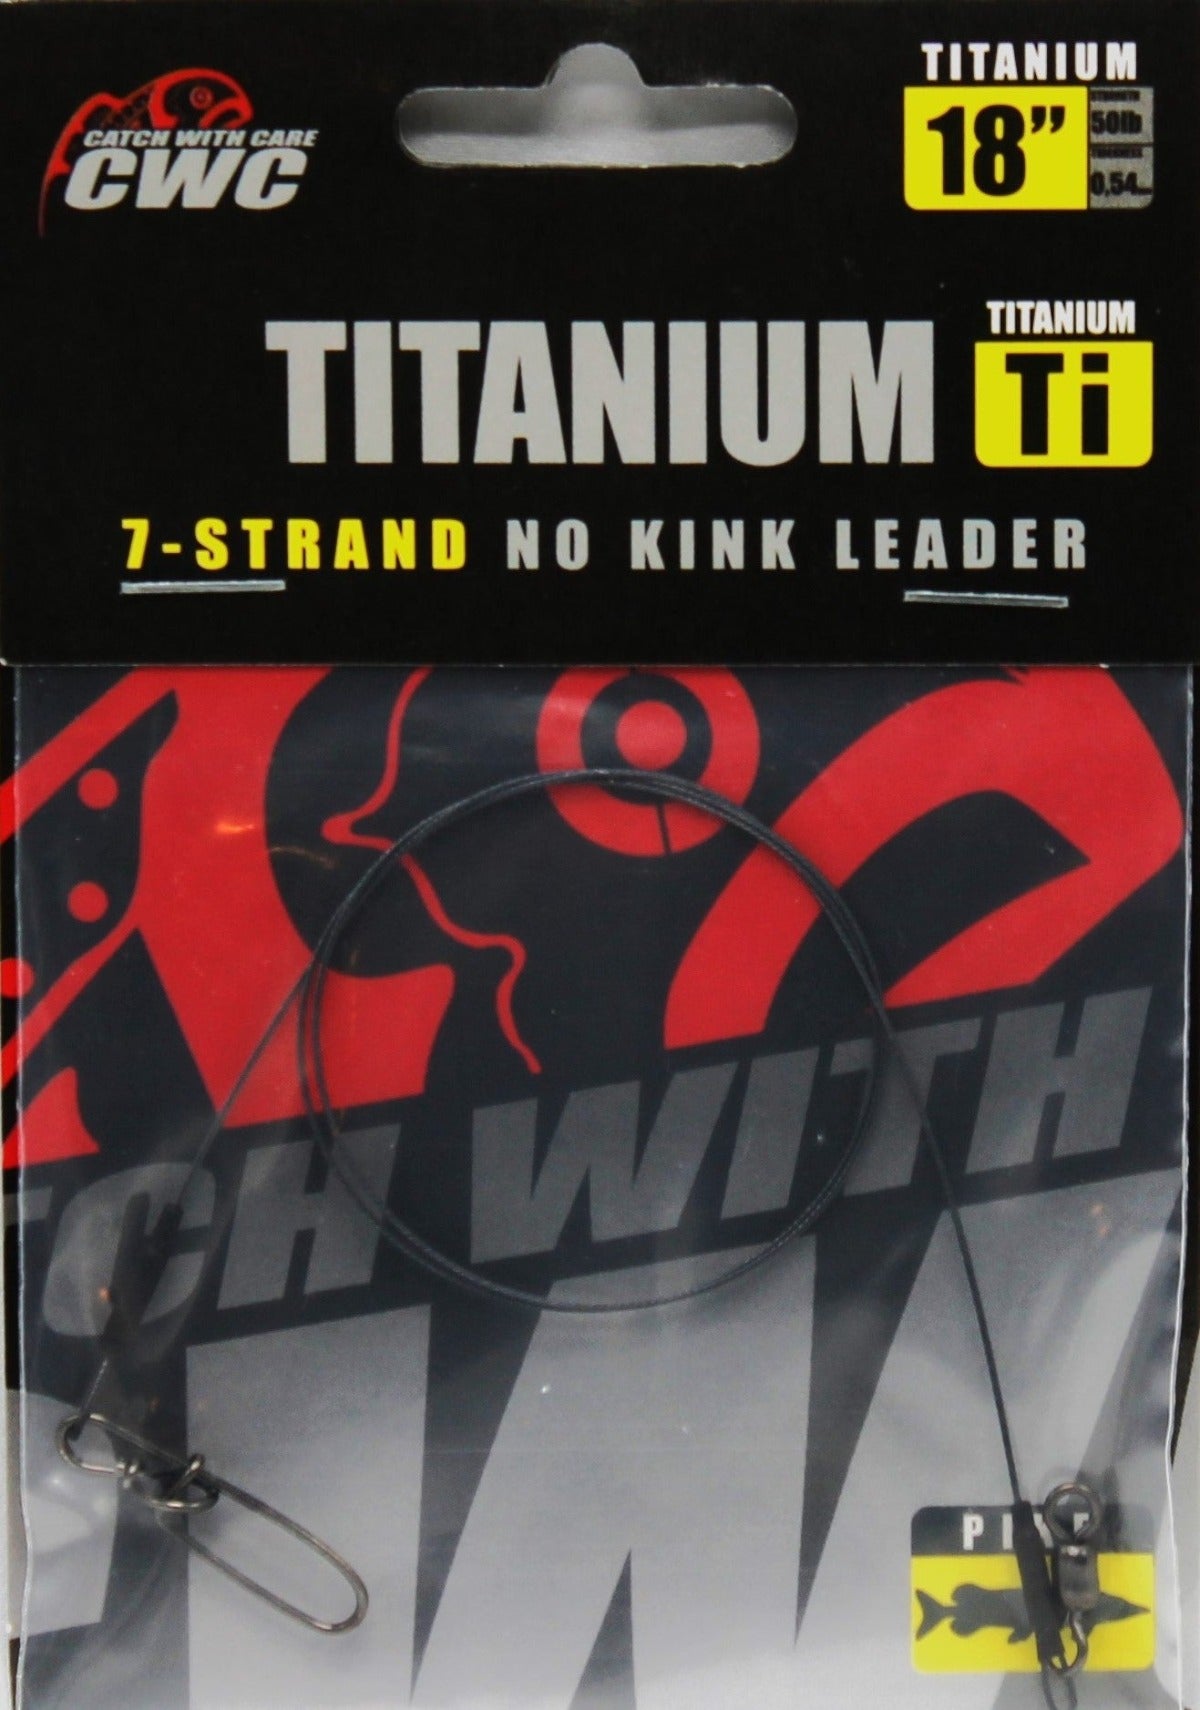 CWC Titanium Wire leader, 7-strand 18'' 50lb - Stay lok